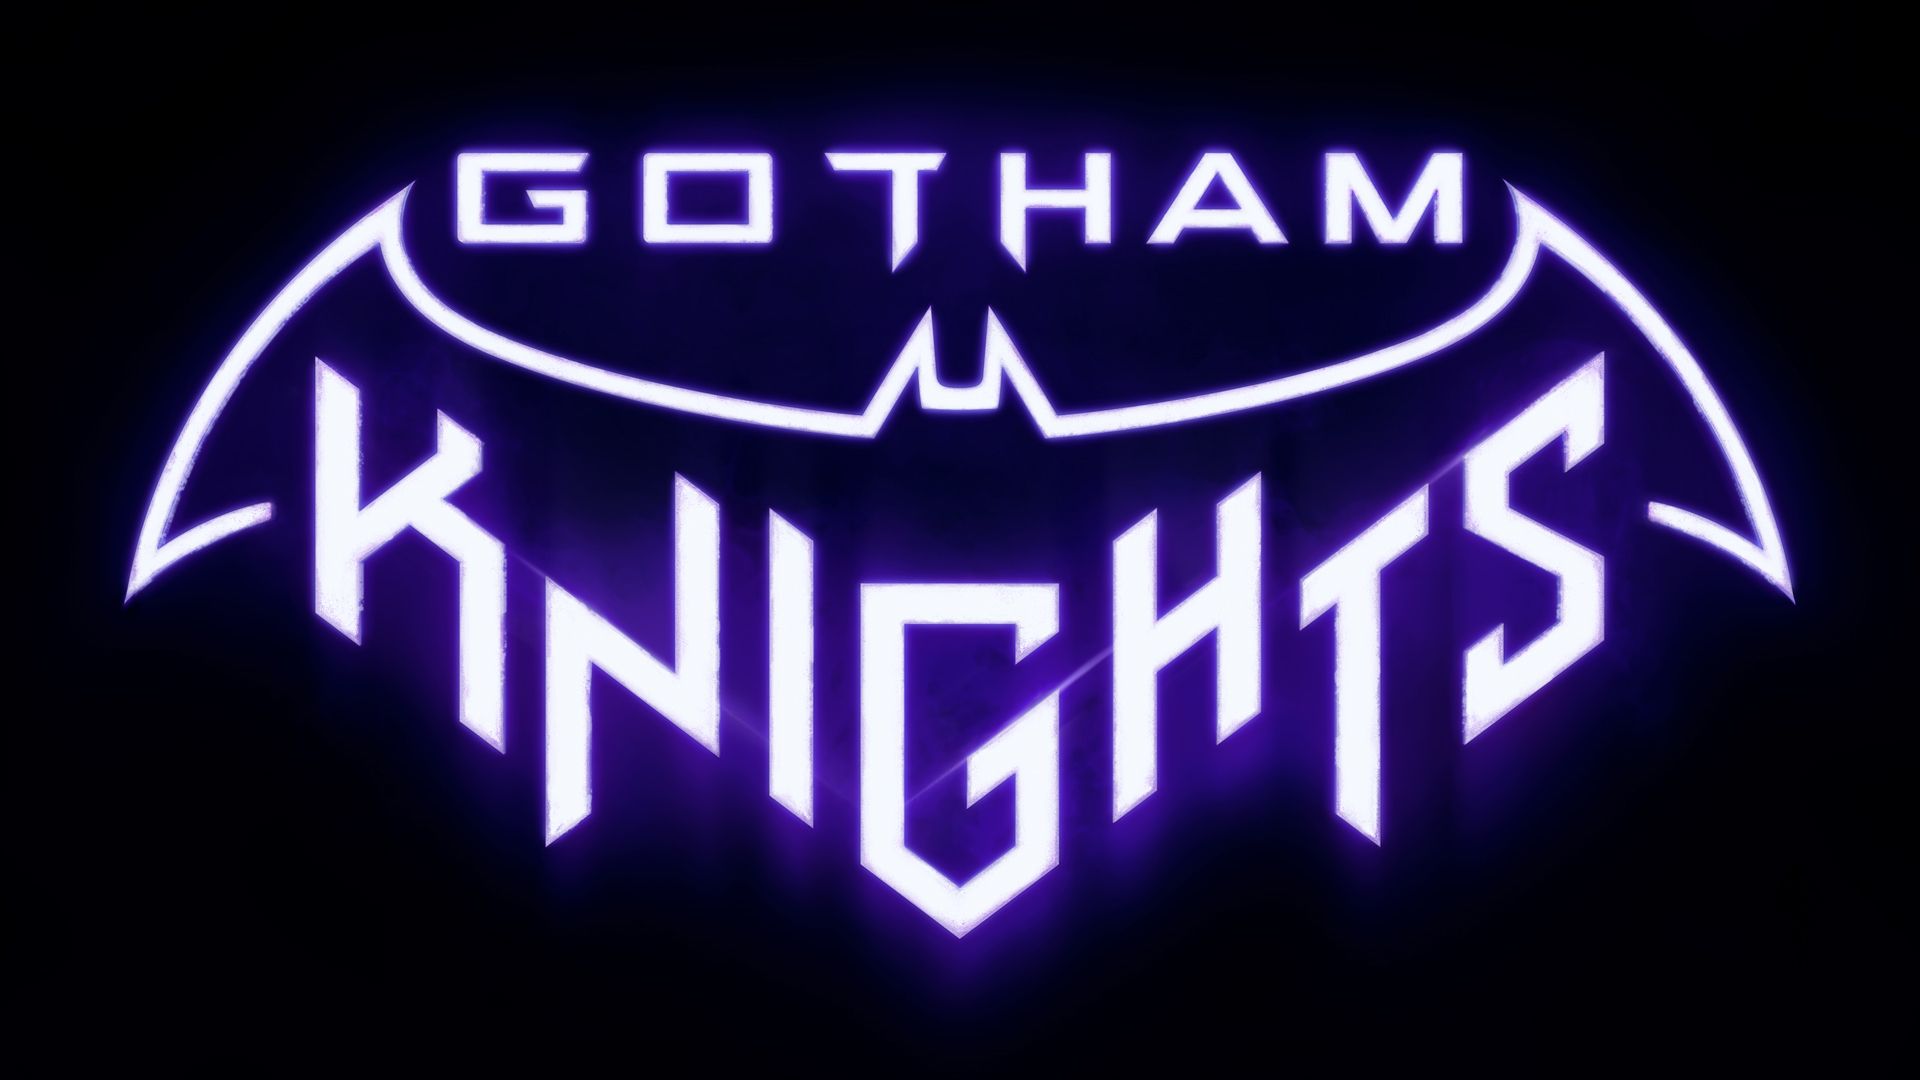 cw gotham knights download